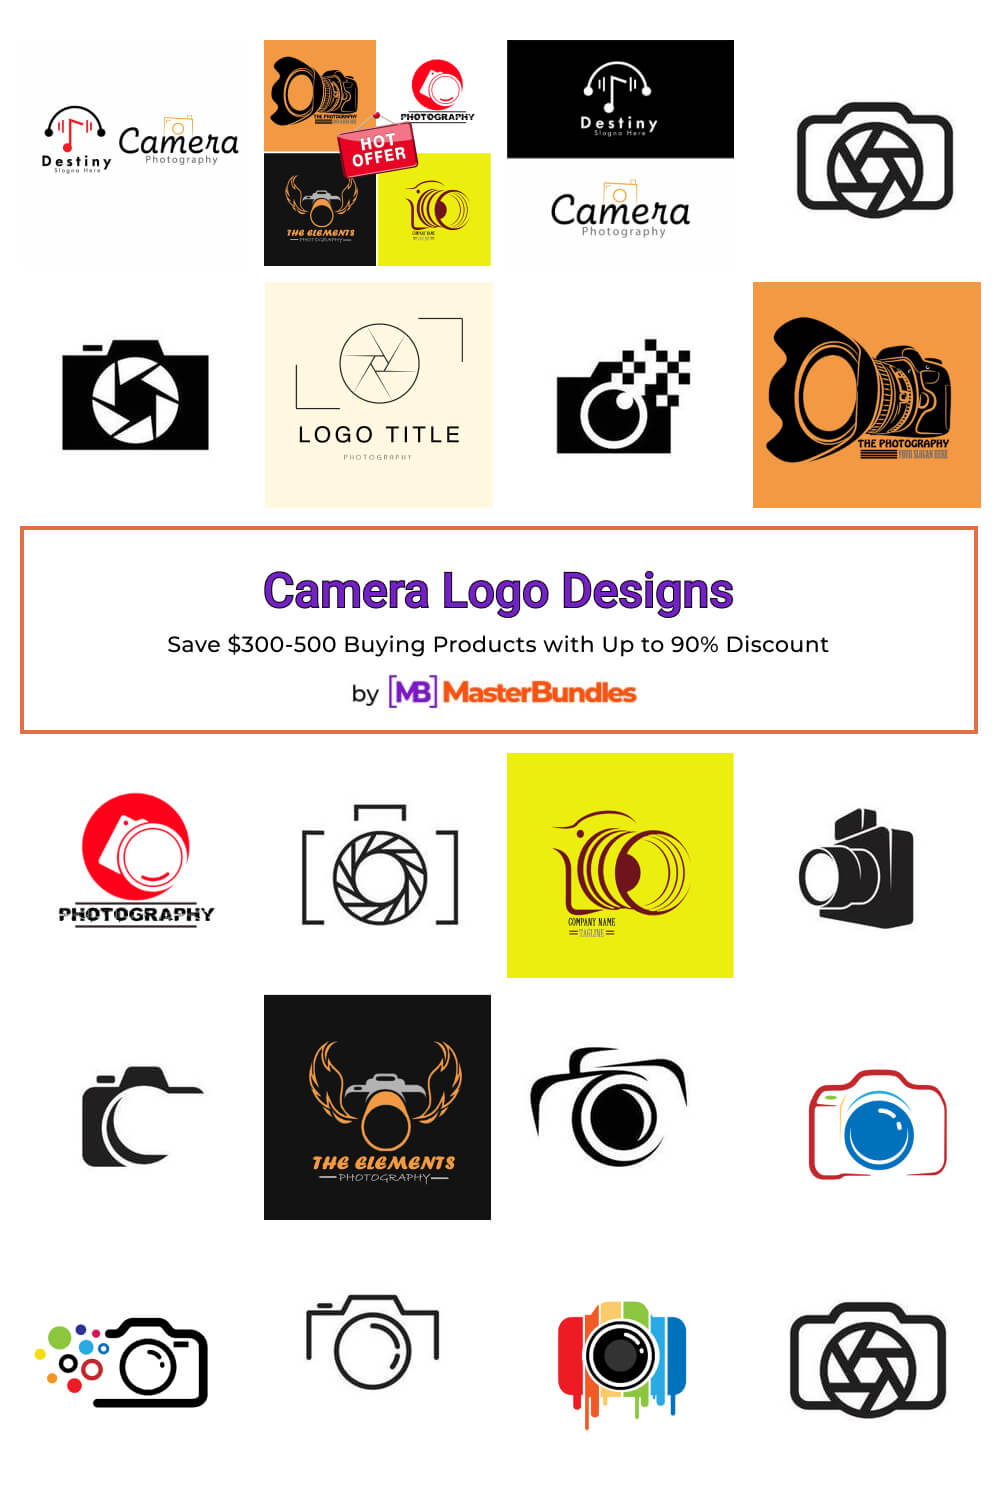 camera logo designs pinterest image.